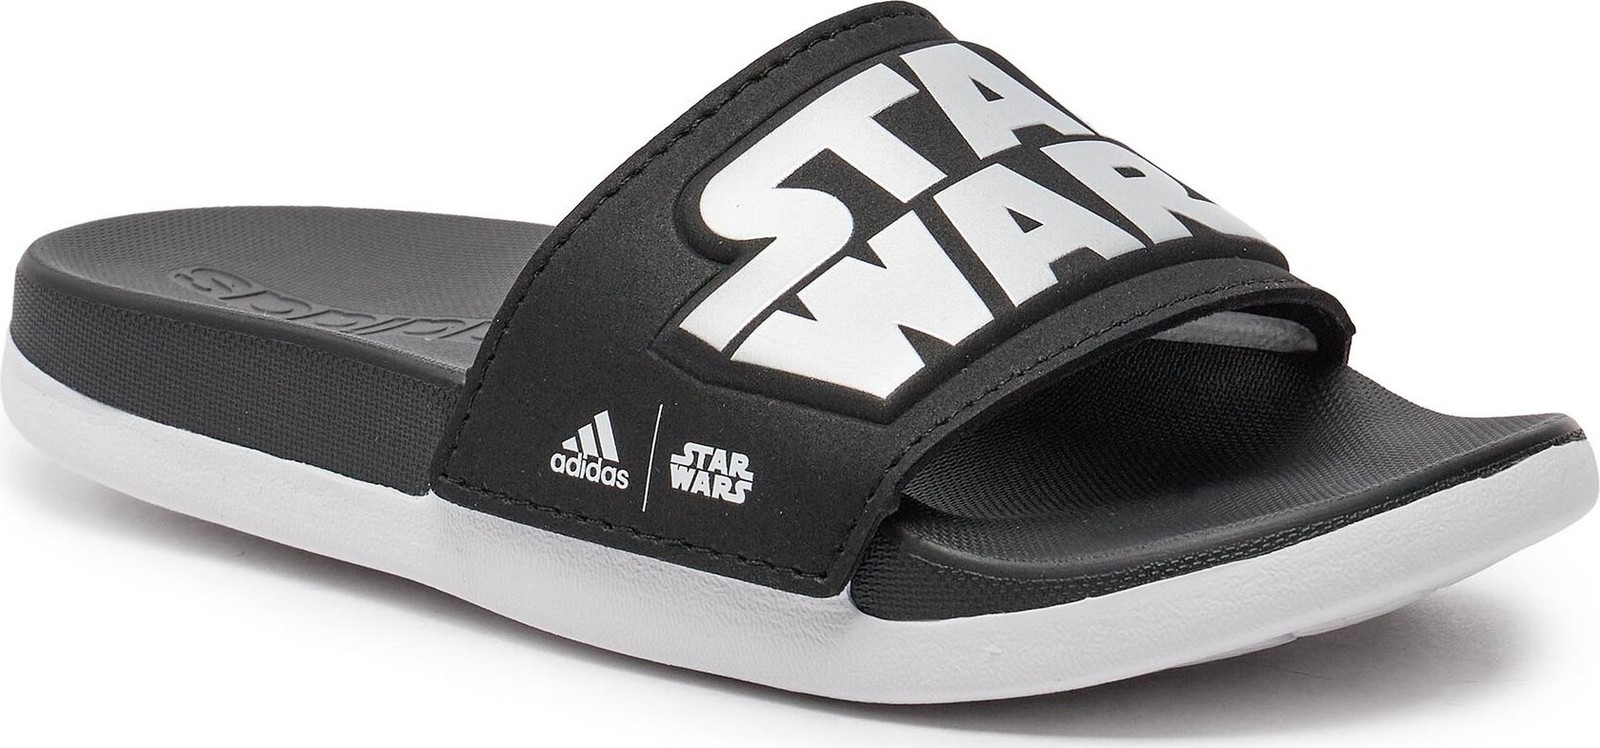 Nazouváky adidas Star Wars adilette Comfort Slides Kids ID5237 Cblack/Silvmt/Ftwwht